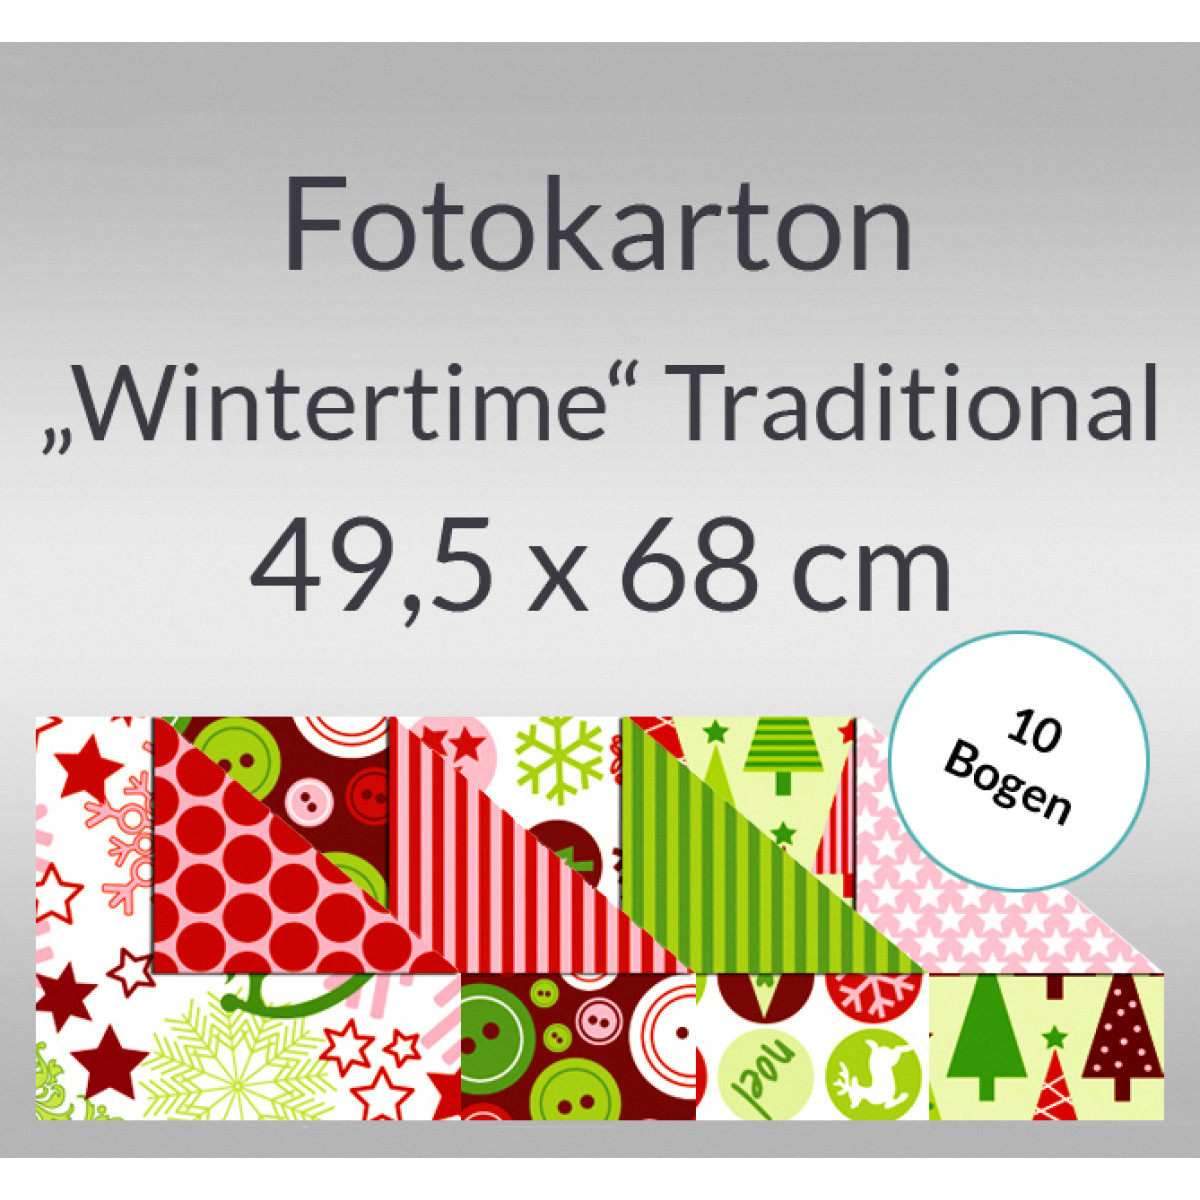 Fotokarton "Wintertime" Traditional 49,5 x 68 cm - 10 Bogen